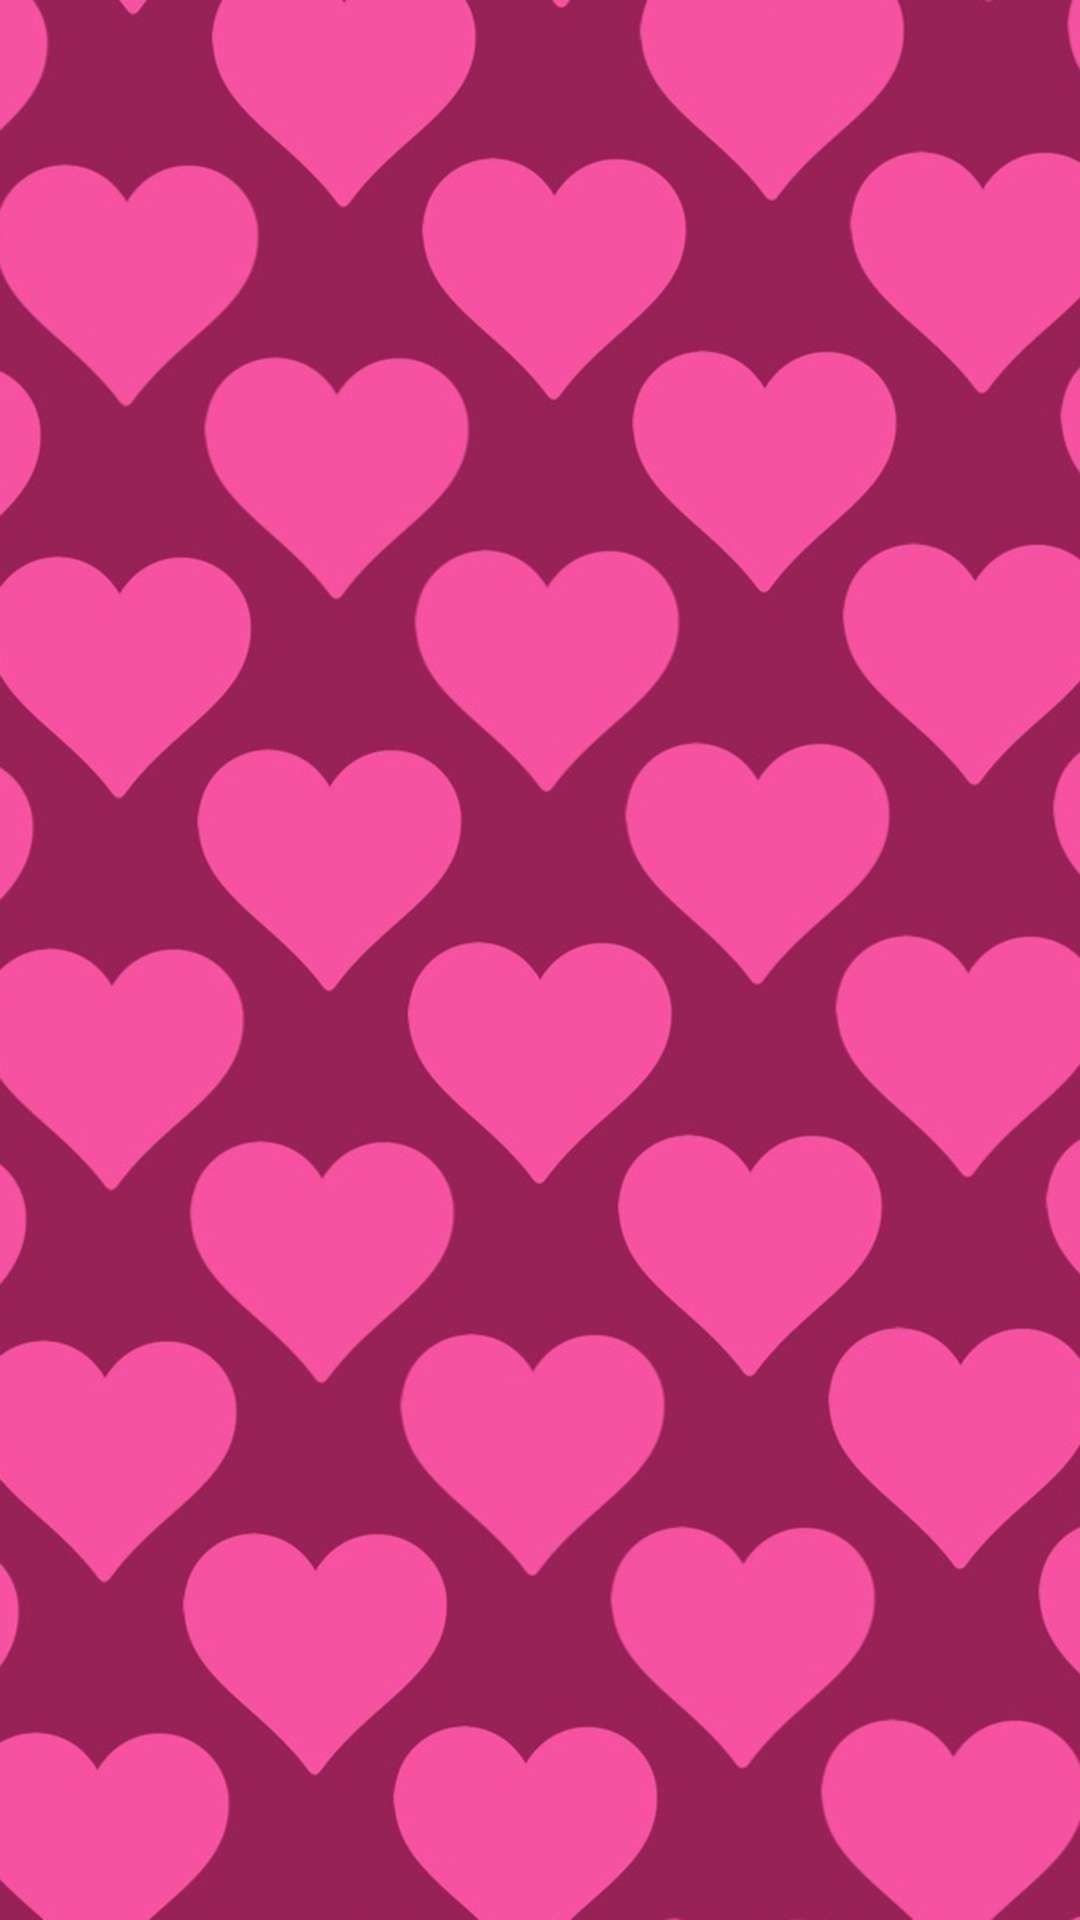 Heart Shaped Cutouts on Pink Background  Free Stock Photo